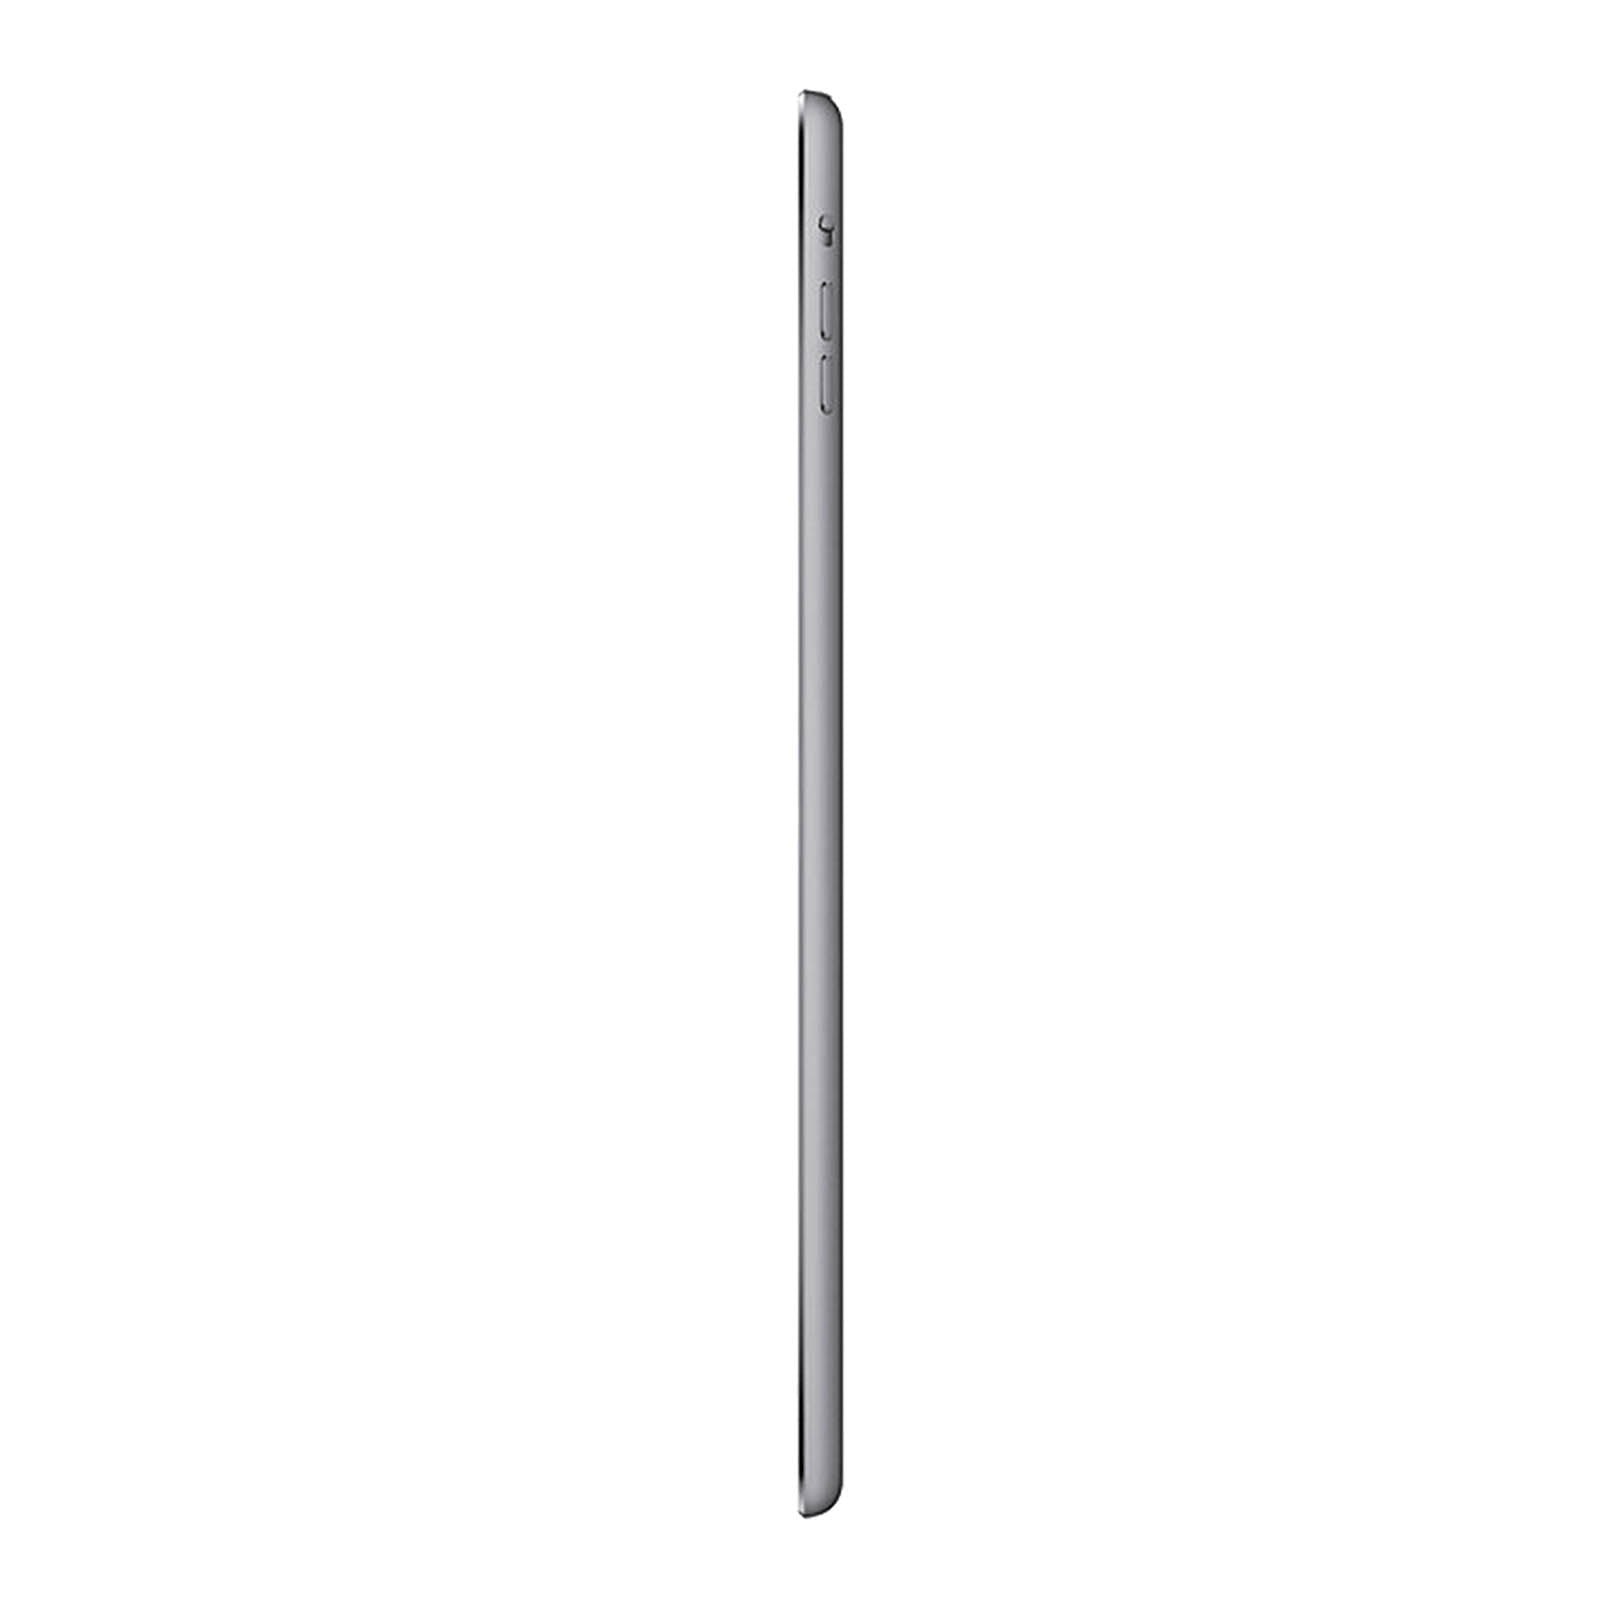 iPad Air 32GB WiFi Space Grey Very Good-Unlocked